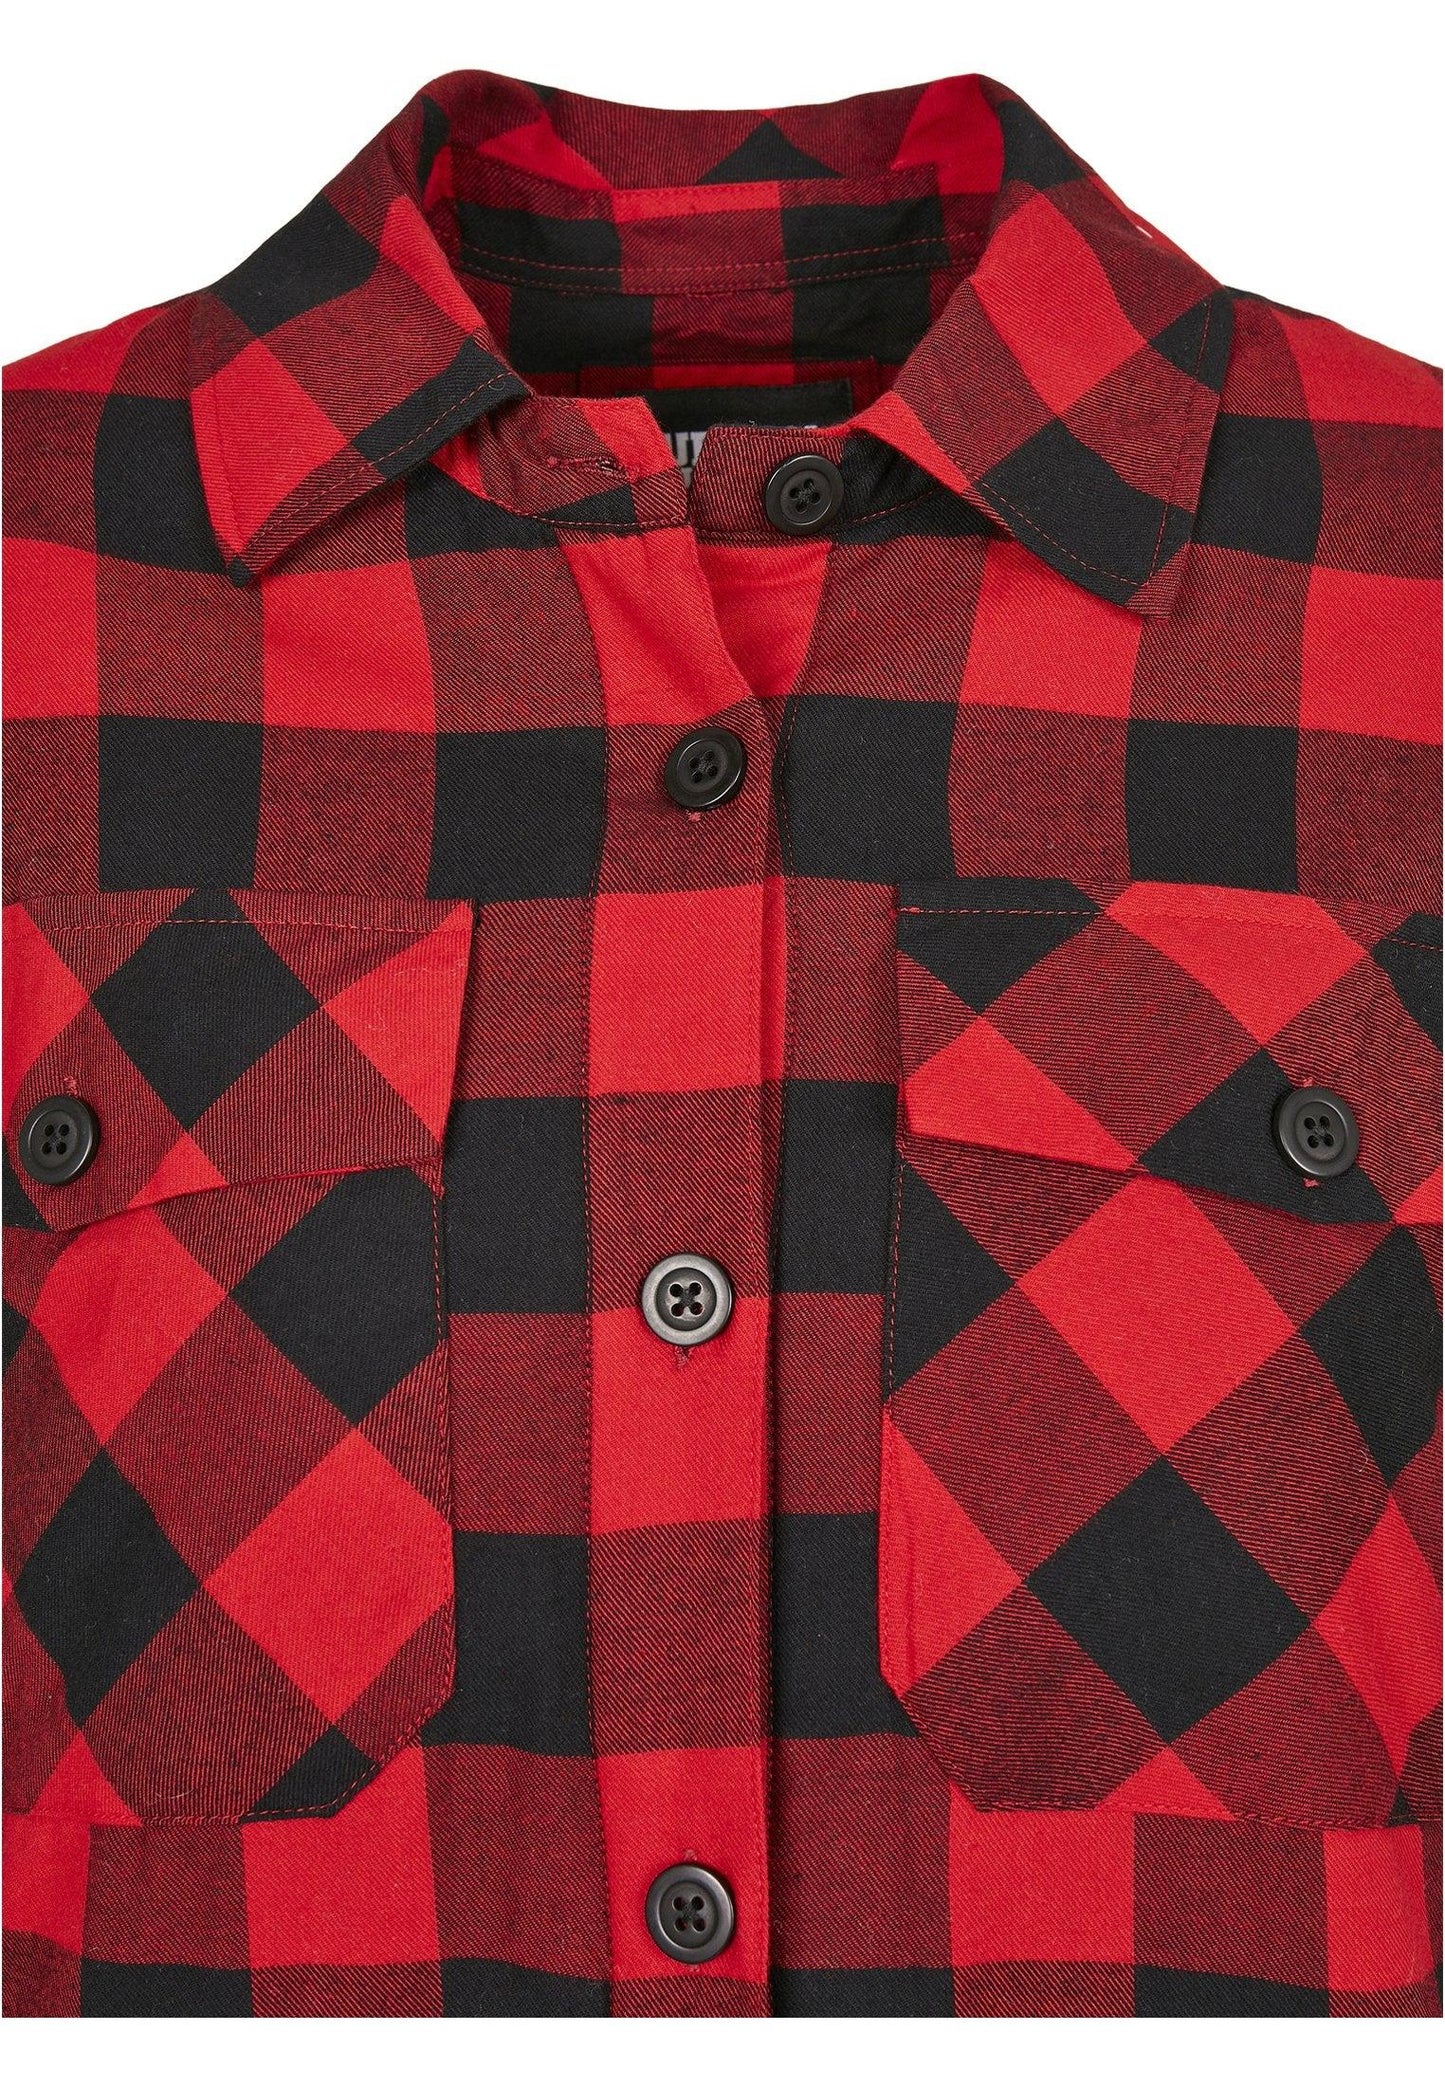 Padded Check Flannel Shirt Black/Red - RAVARCAM APPAREL